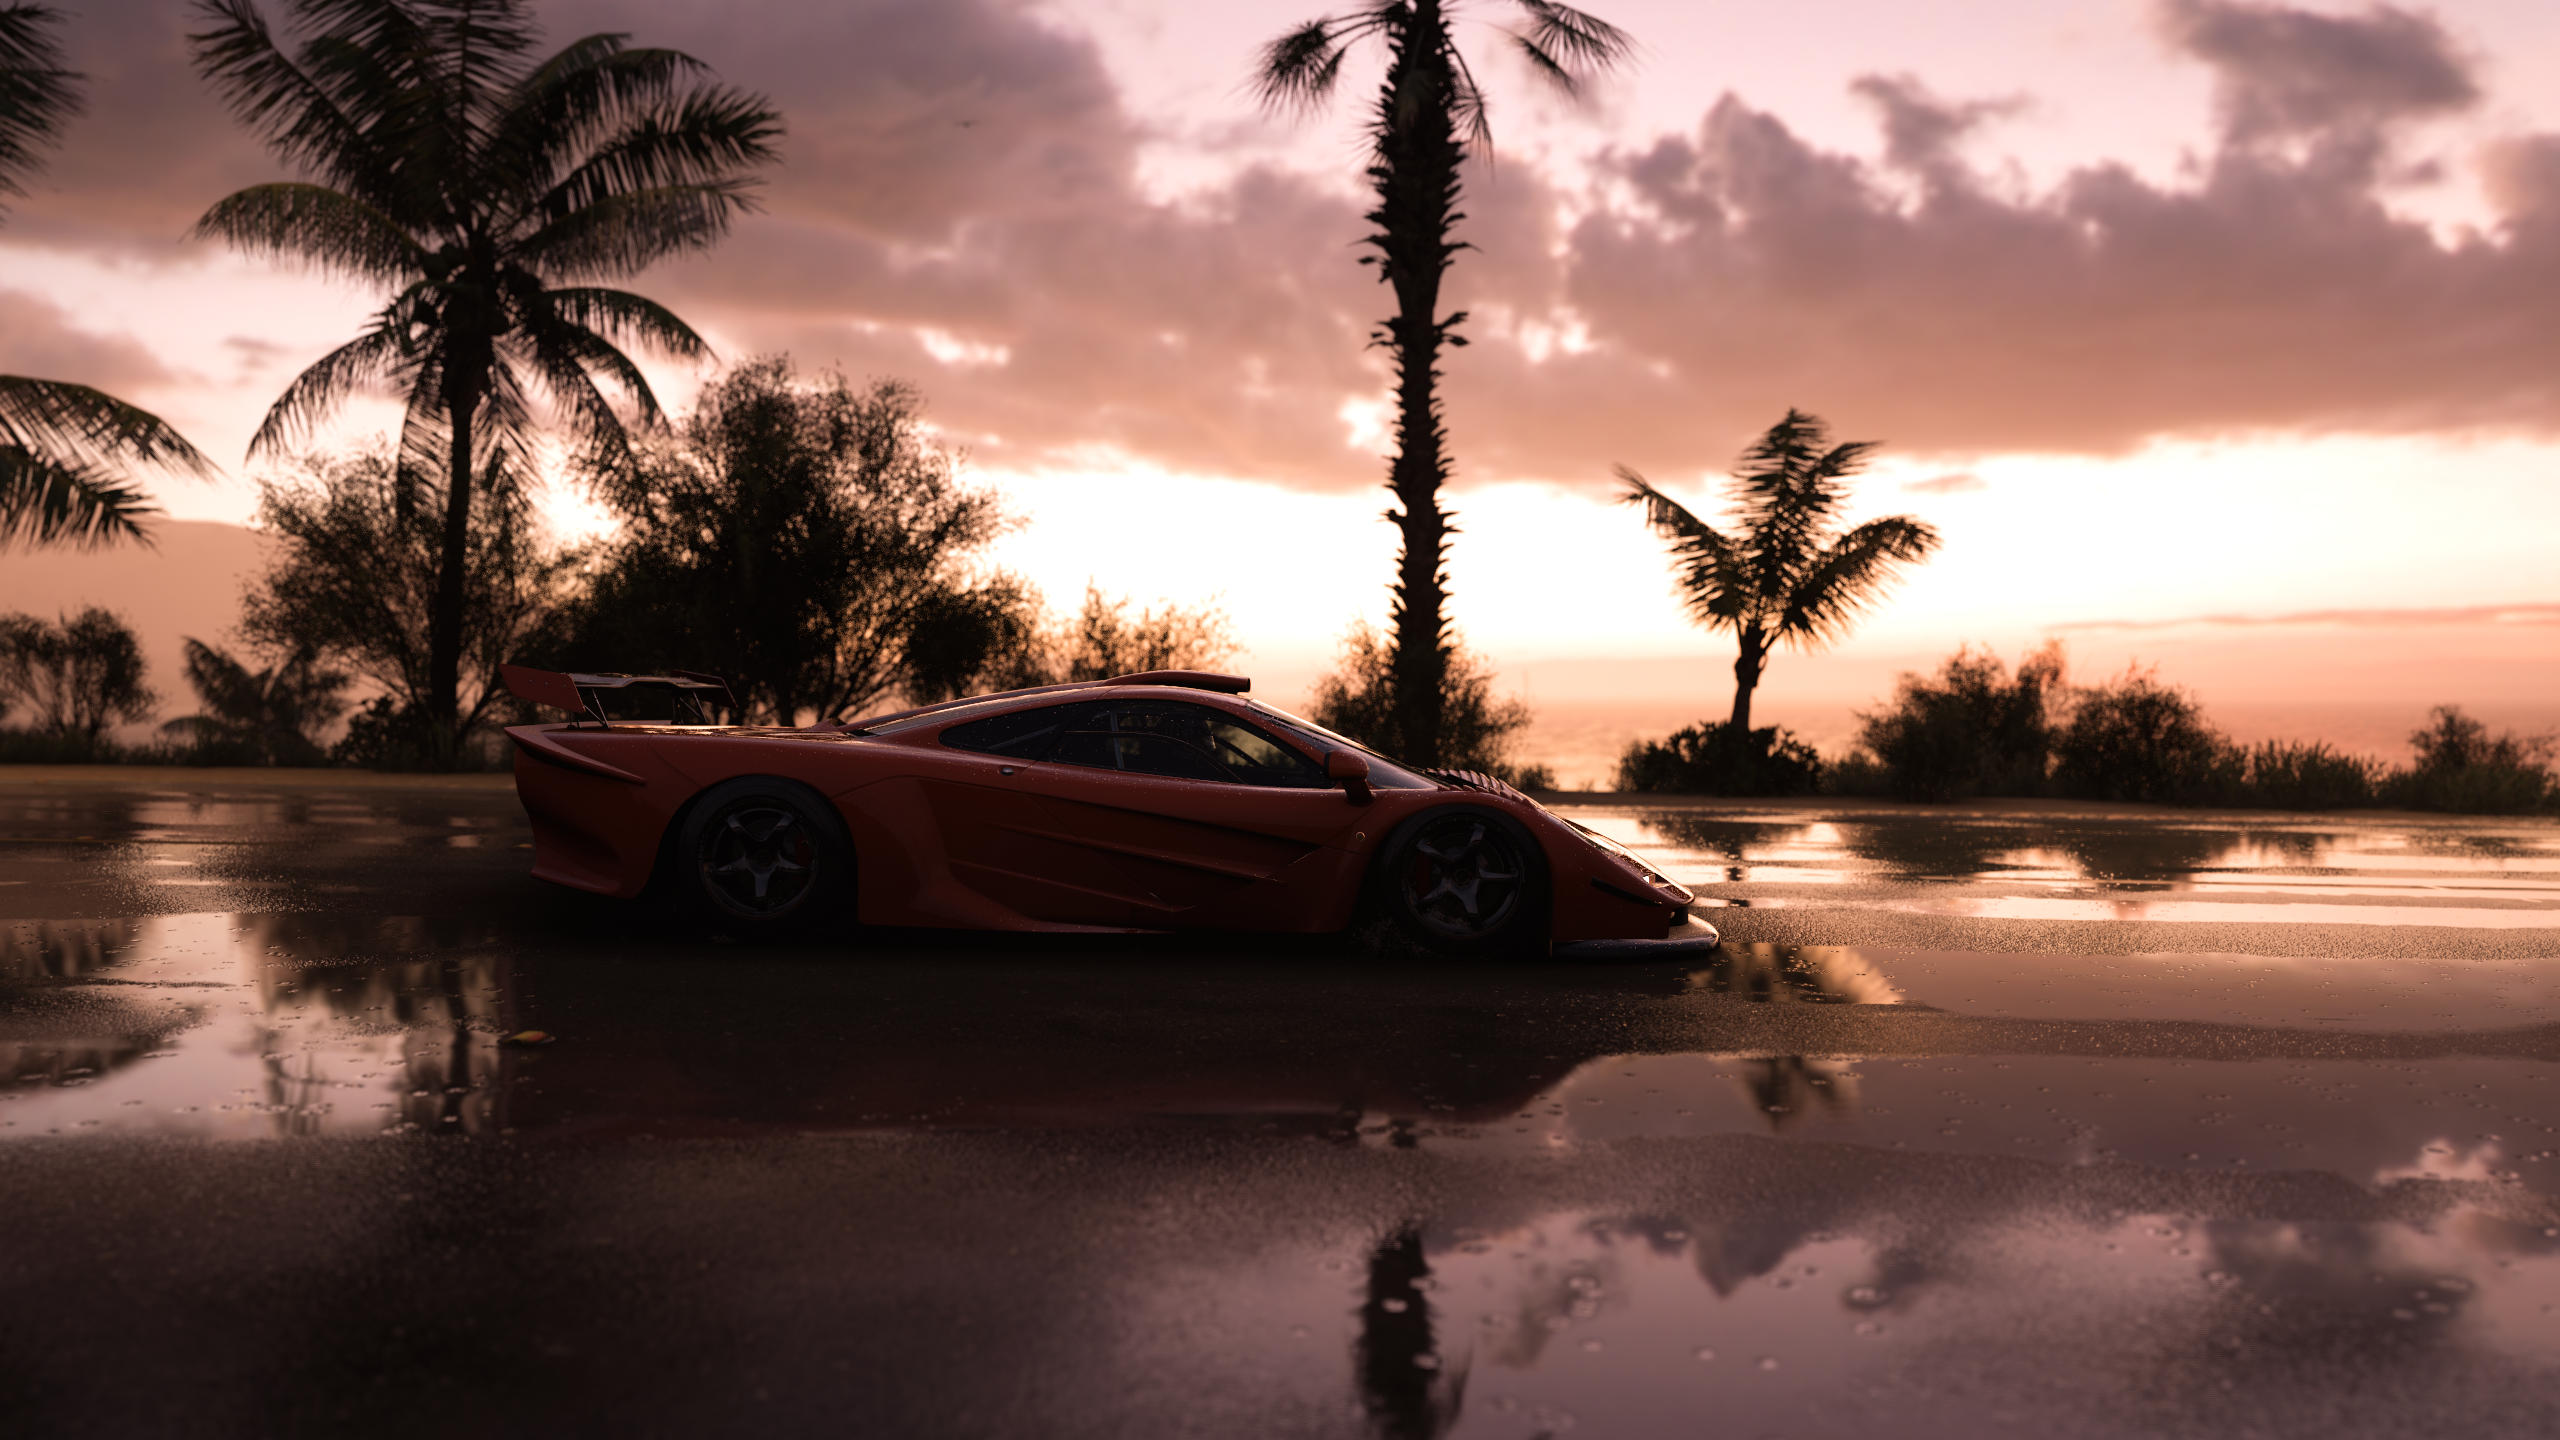 Forza Horizon 5 McLaren F1 Sunset Video Games Sunset Glow Palm Trees Reflection Water Sky Clouds Car 2560x1440